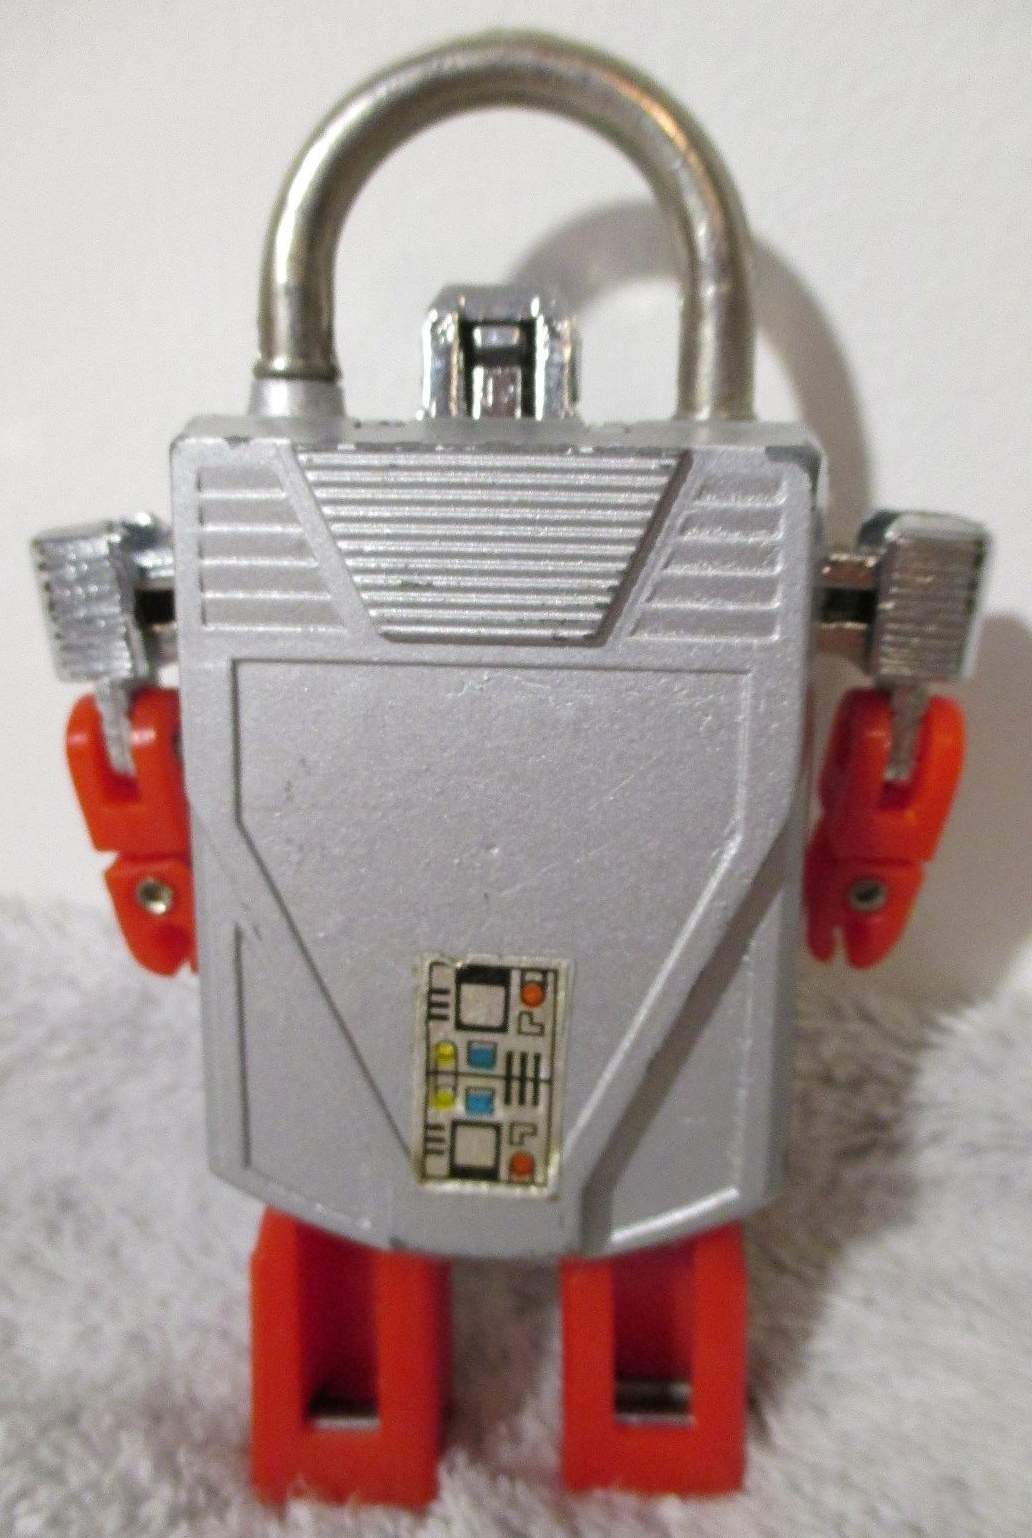 LockMan Robot